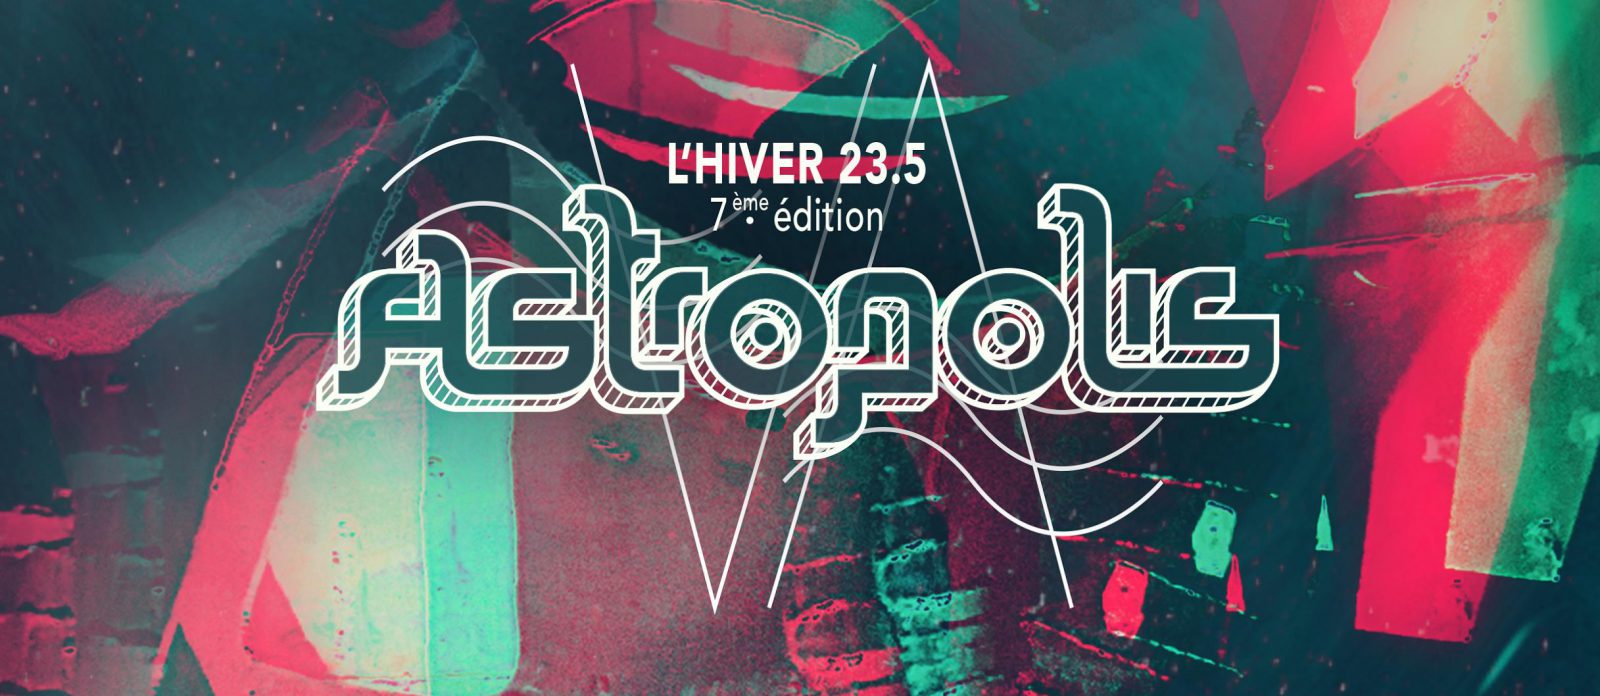 [Festival] Astropolis l’Hiver #7